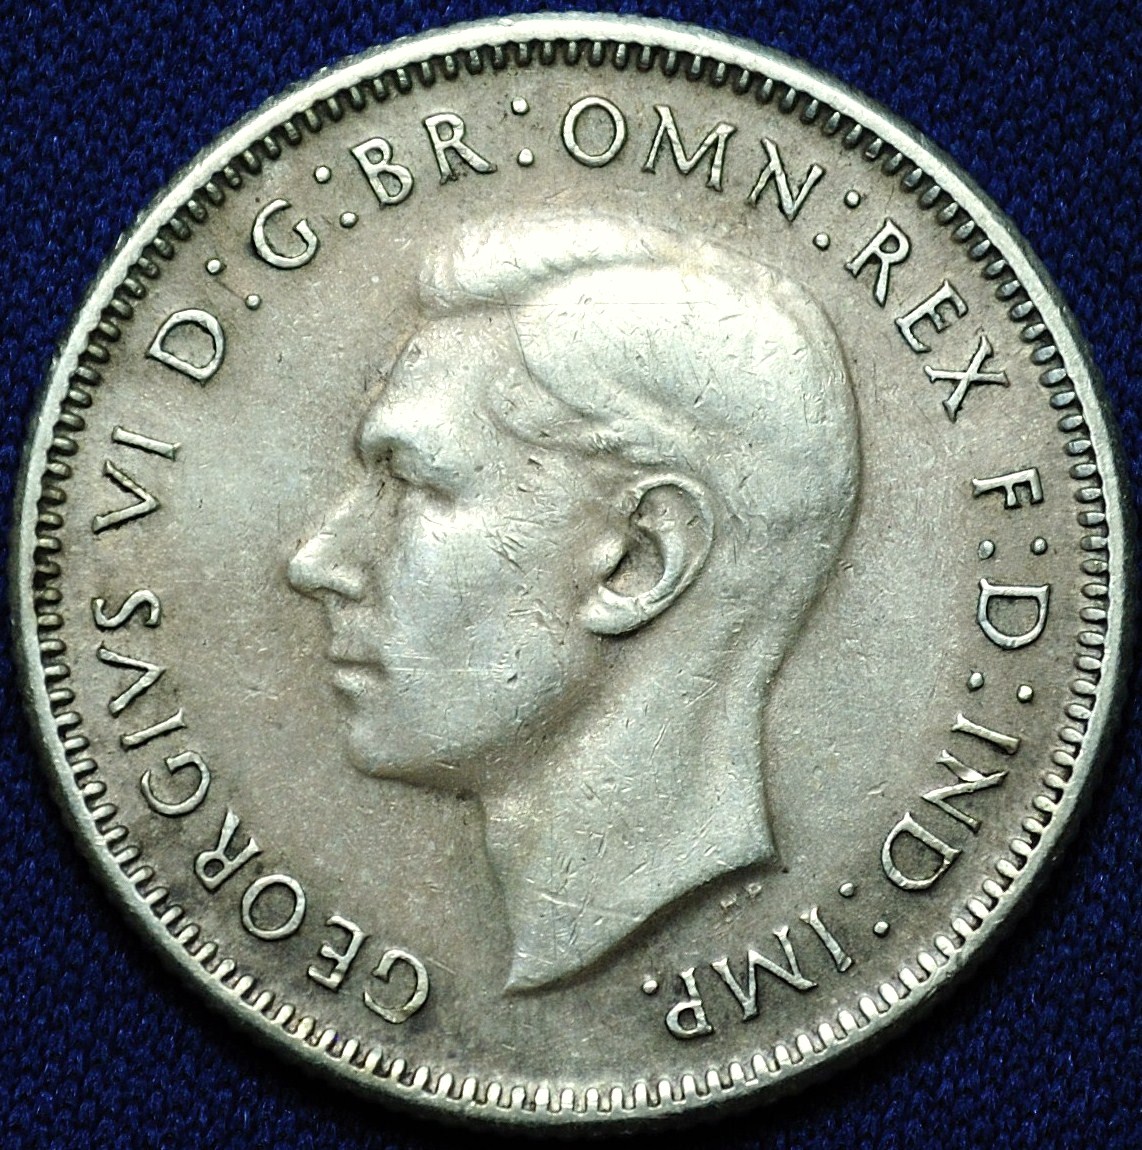 1940 Australian shilling obverse